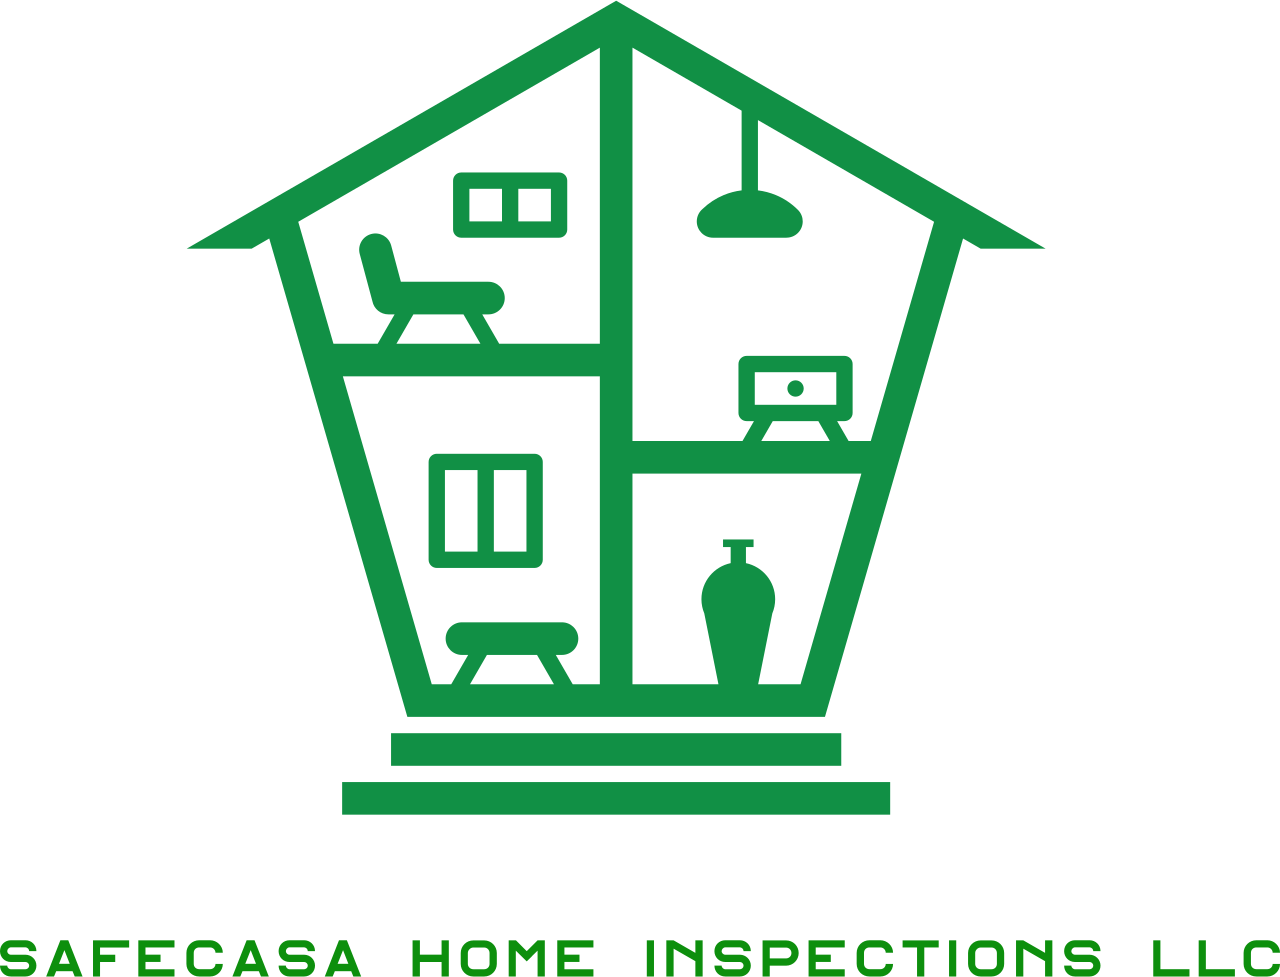 SafeCasa Home Inspections LLC's logo